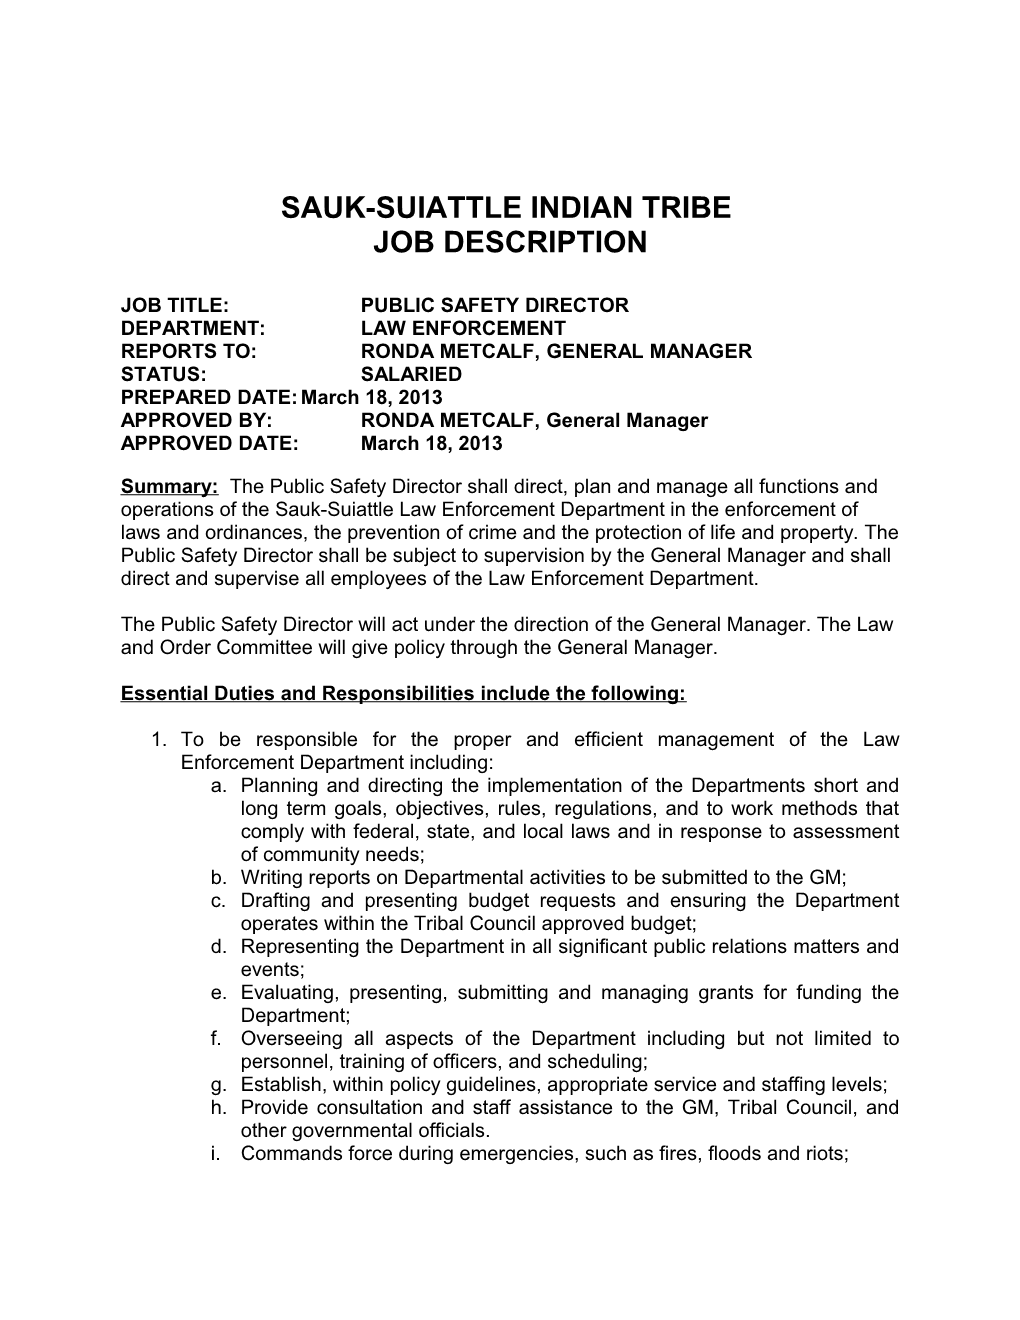 Sauk-Suiattle Indian Tribe Job Description